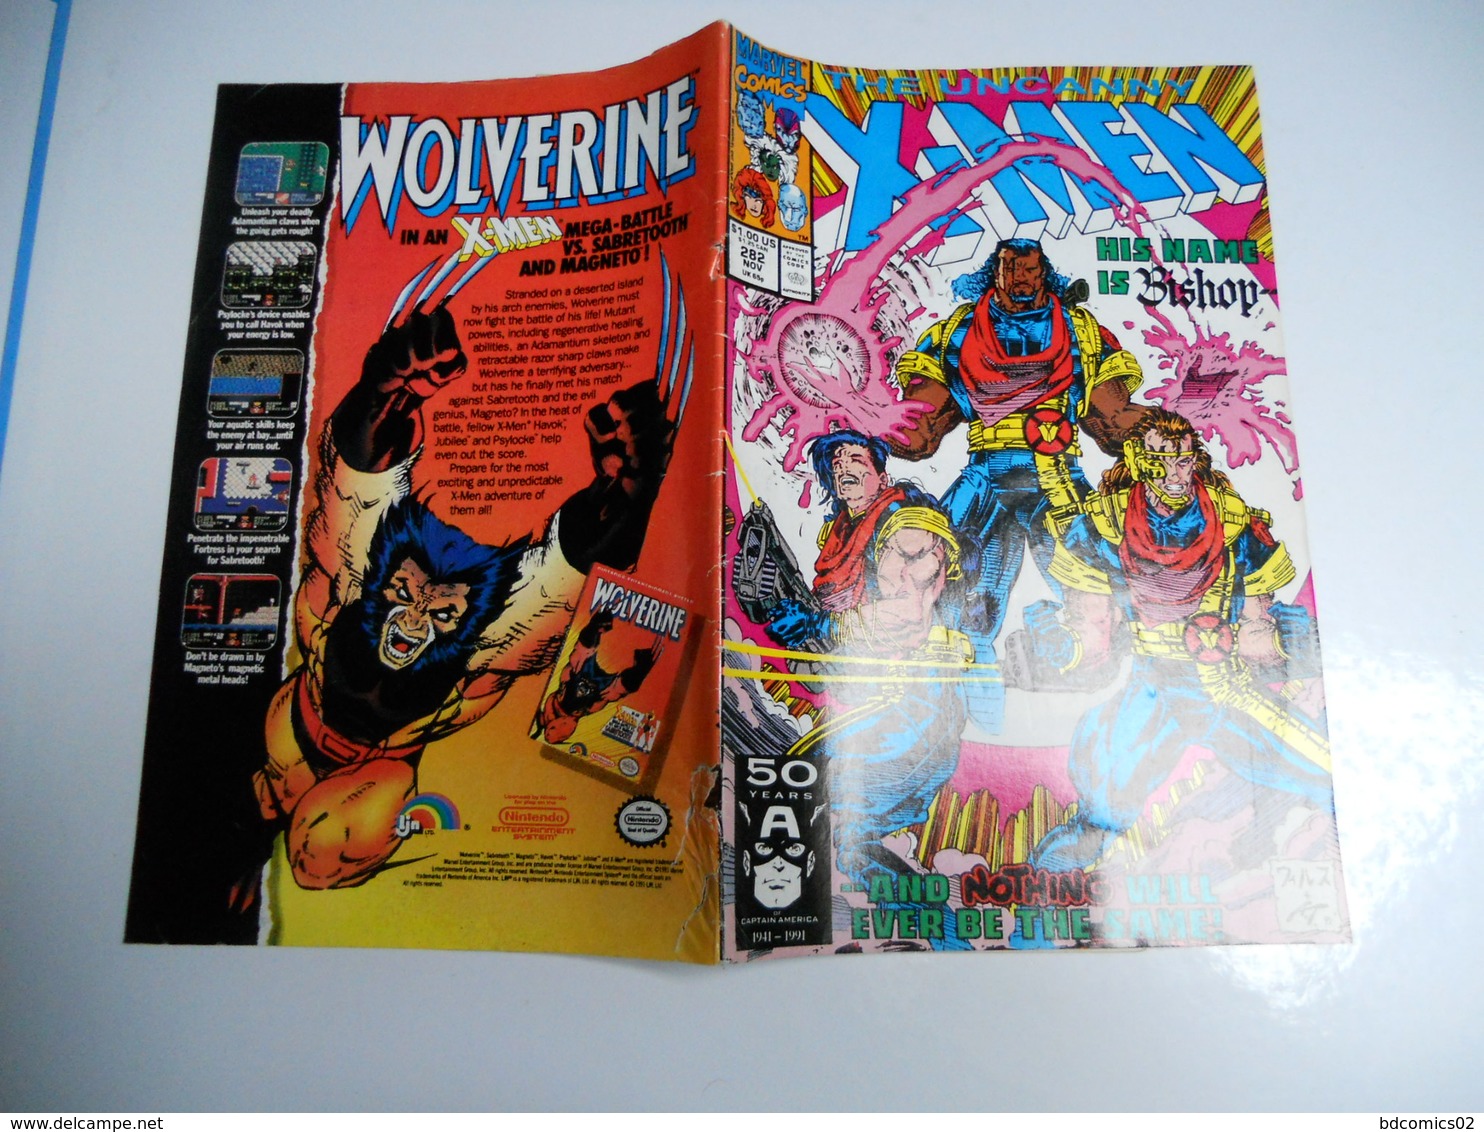 The Uncanny X-Men Vol 1 N°282 (Vo - Marvel